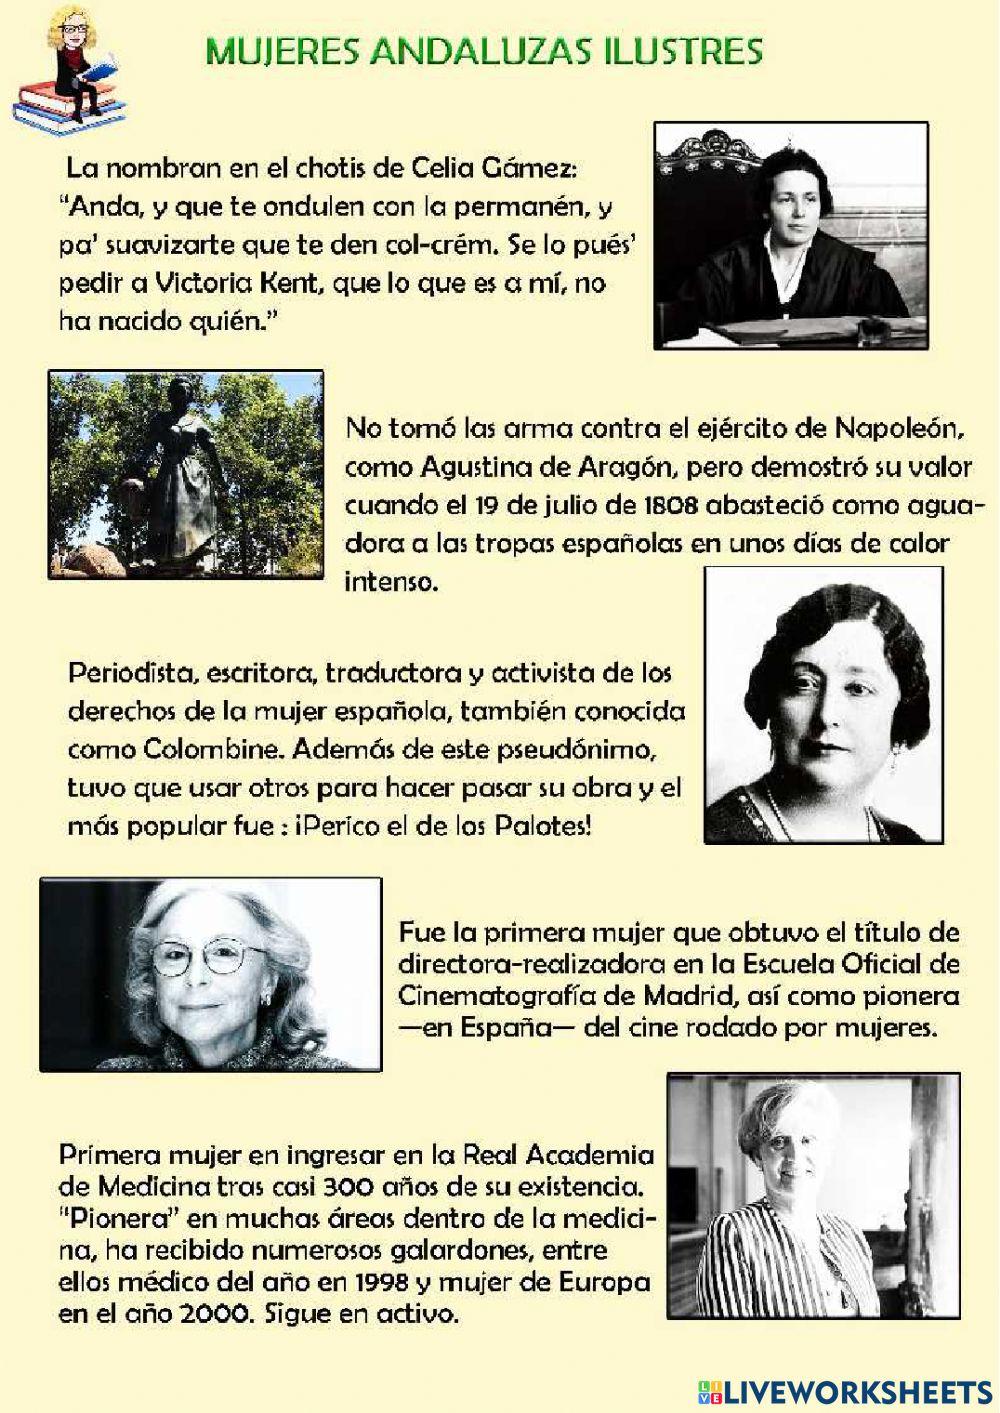 Mujeres andaluzas Ilustres worksheet | Live Worksheets